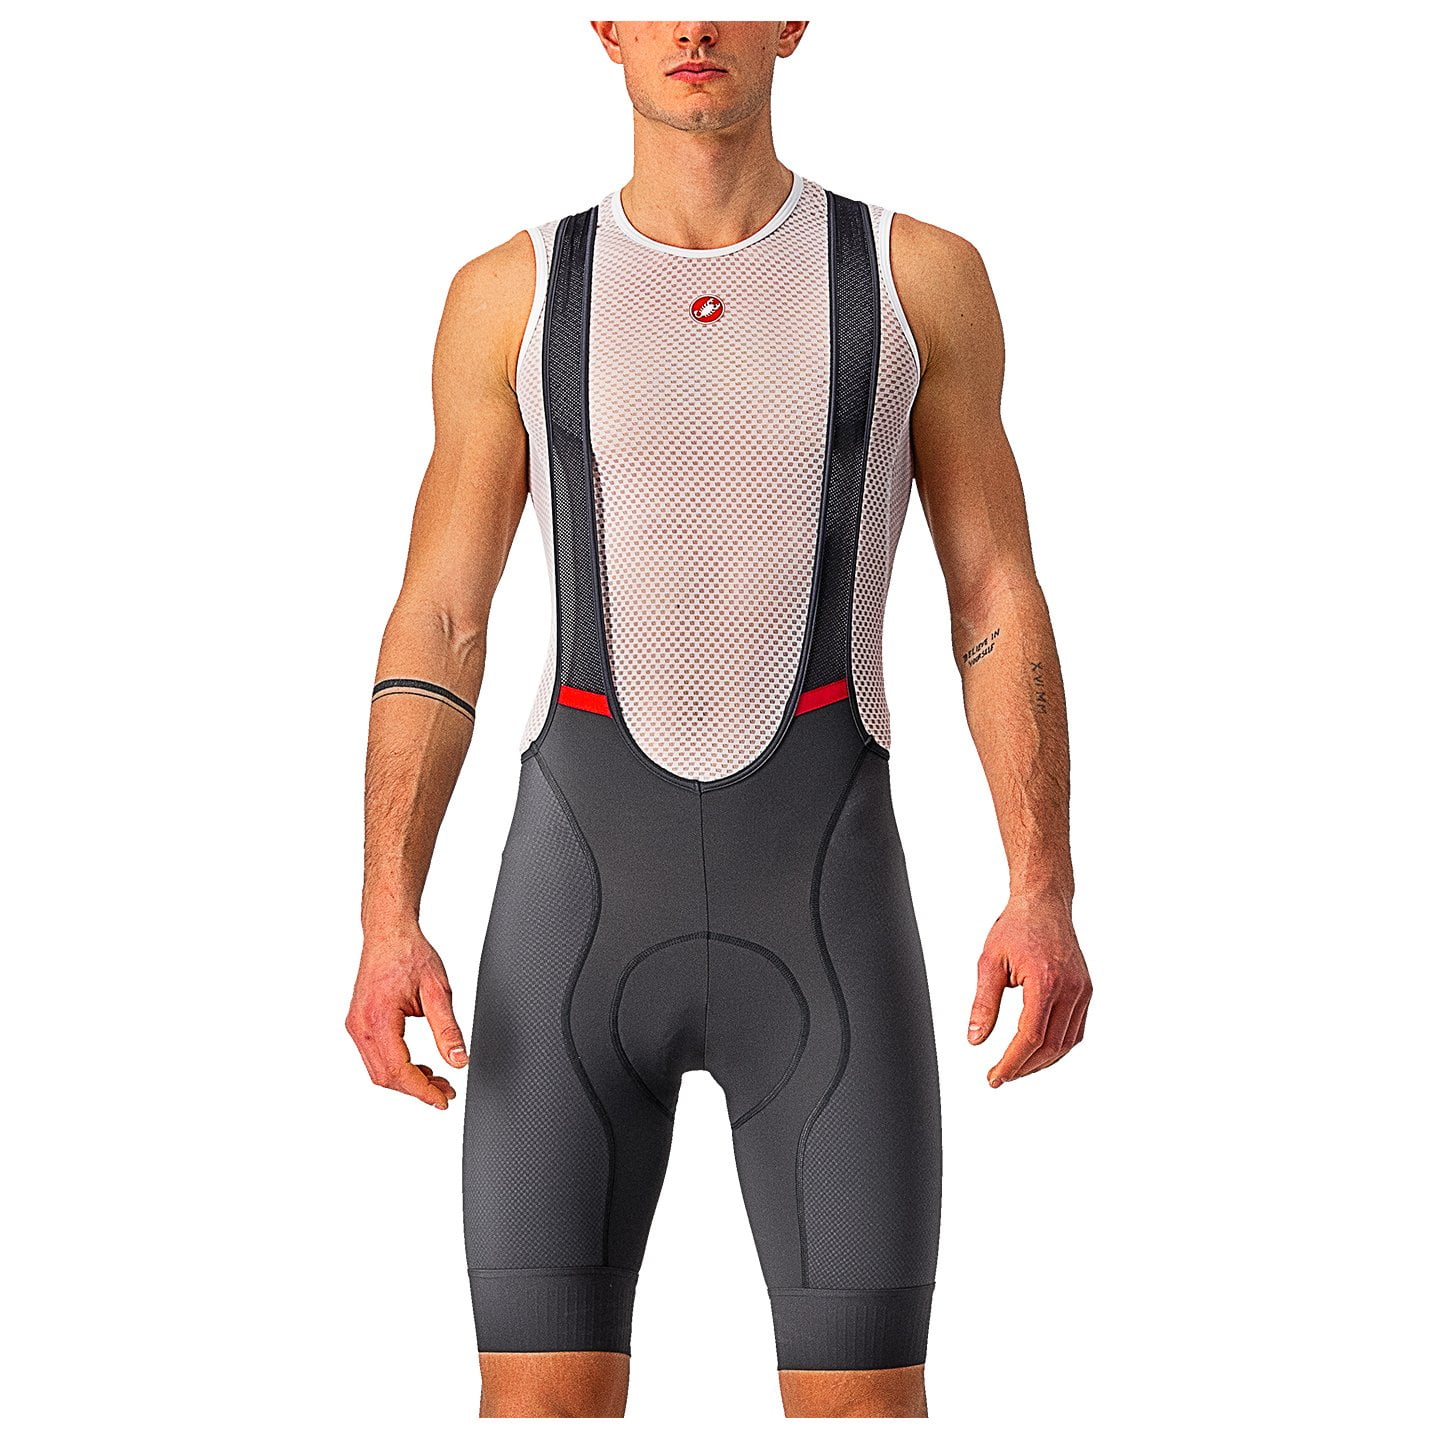 Competizione Bib Shorts Bib Shorts, for men, size XL, Cycle shorts, Cycling clothing